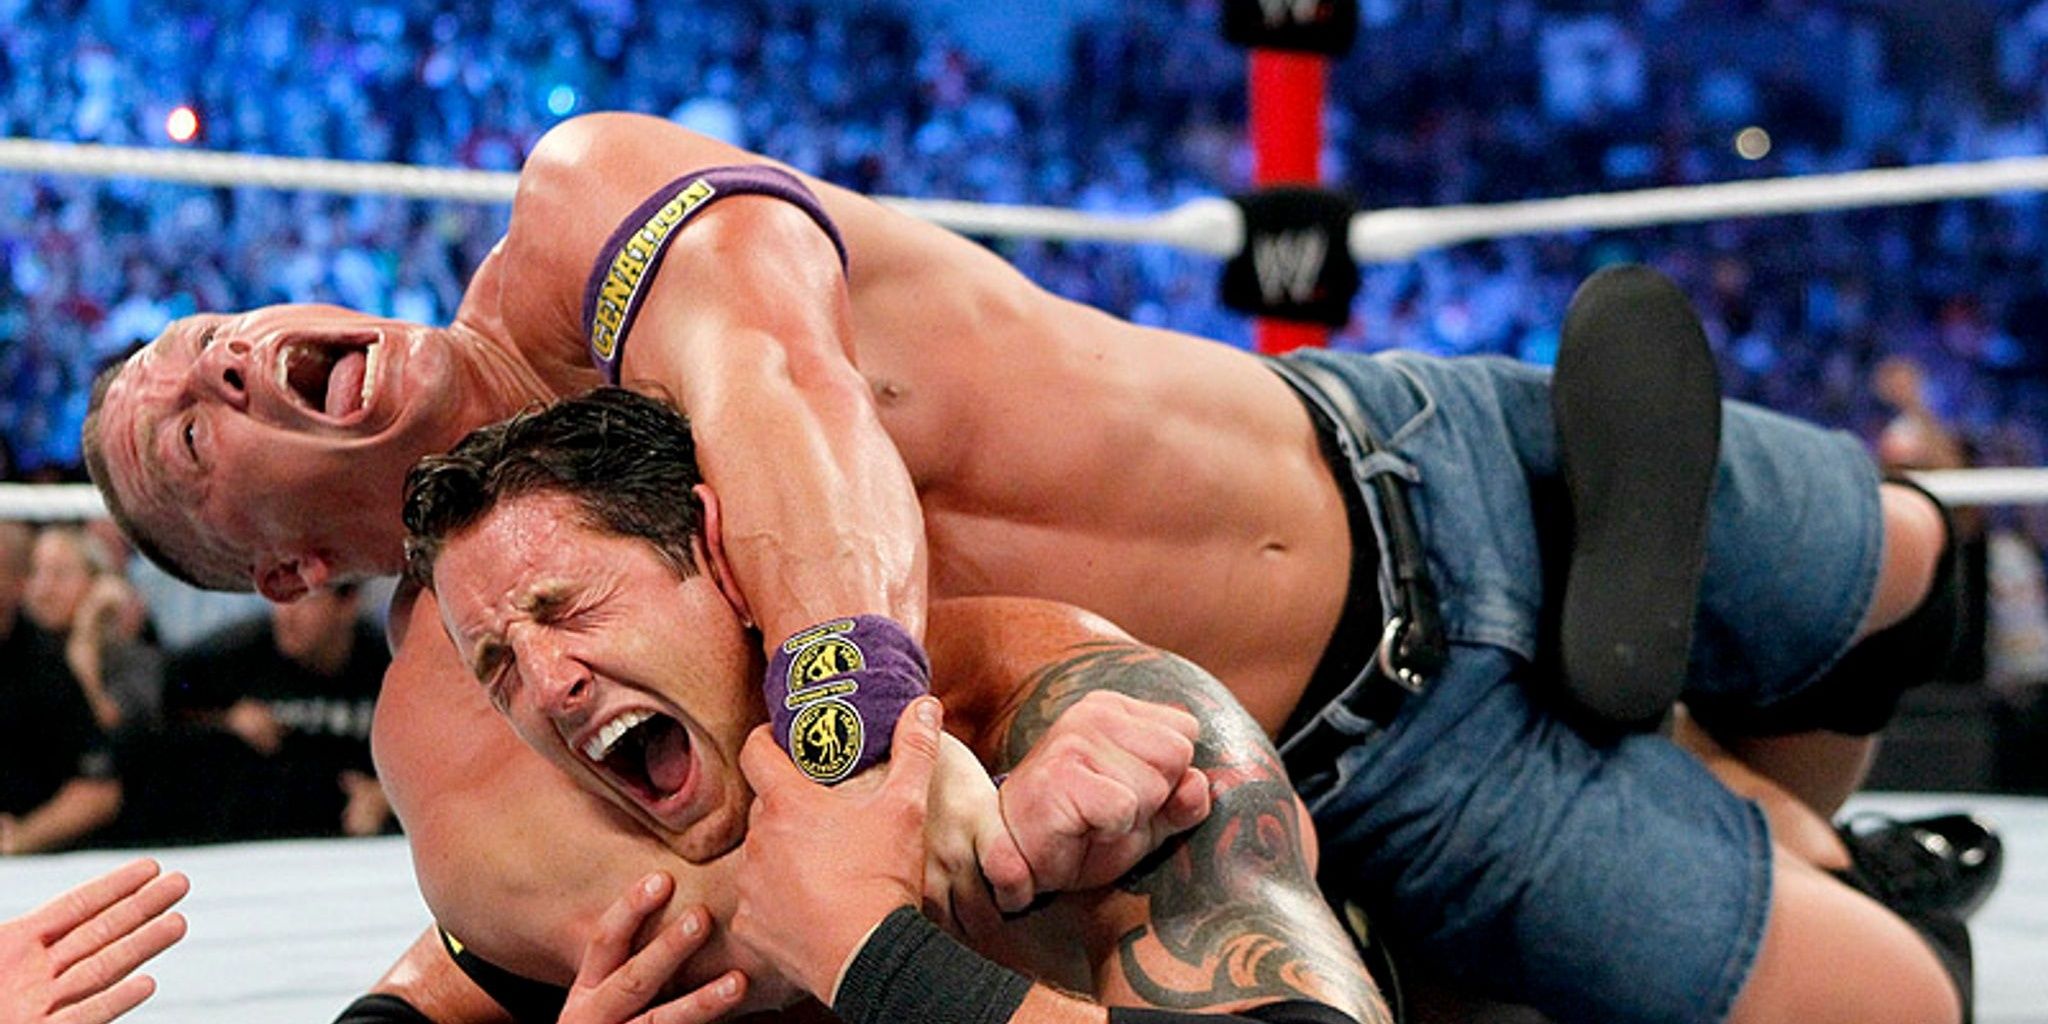 John Cena with the STFU on Wade Barrett